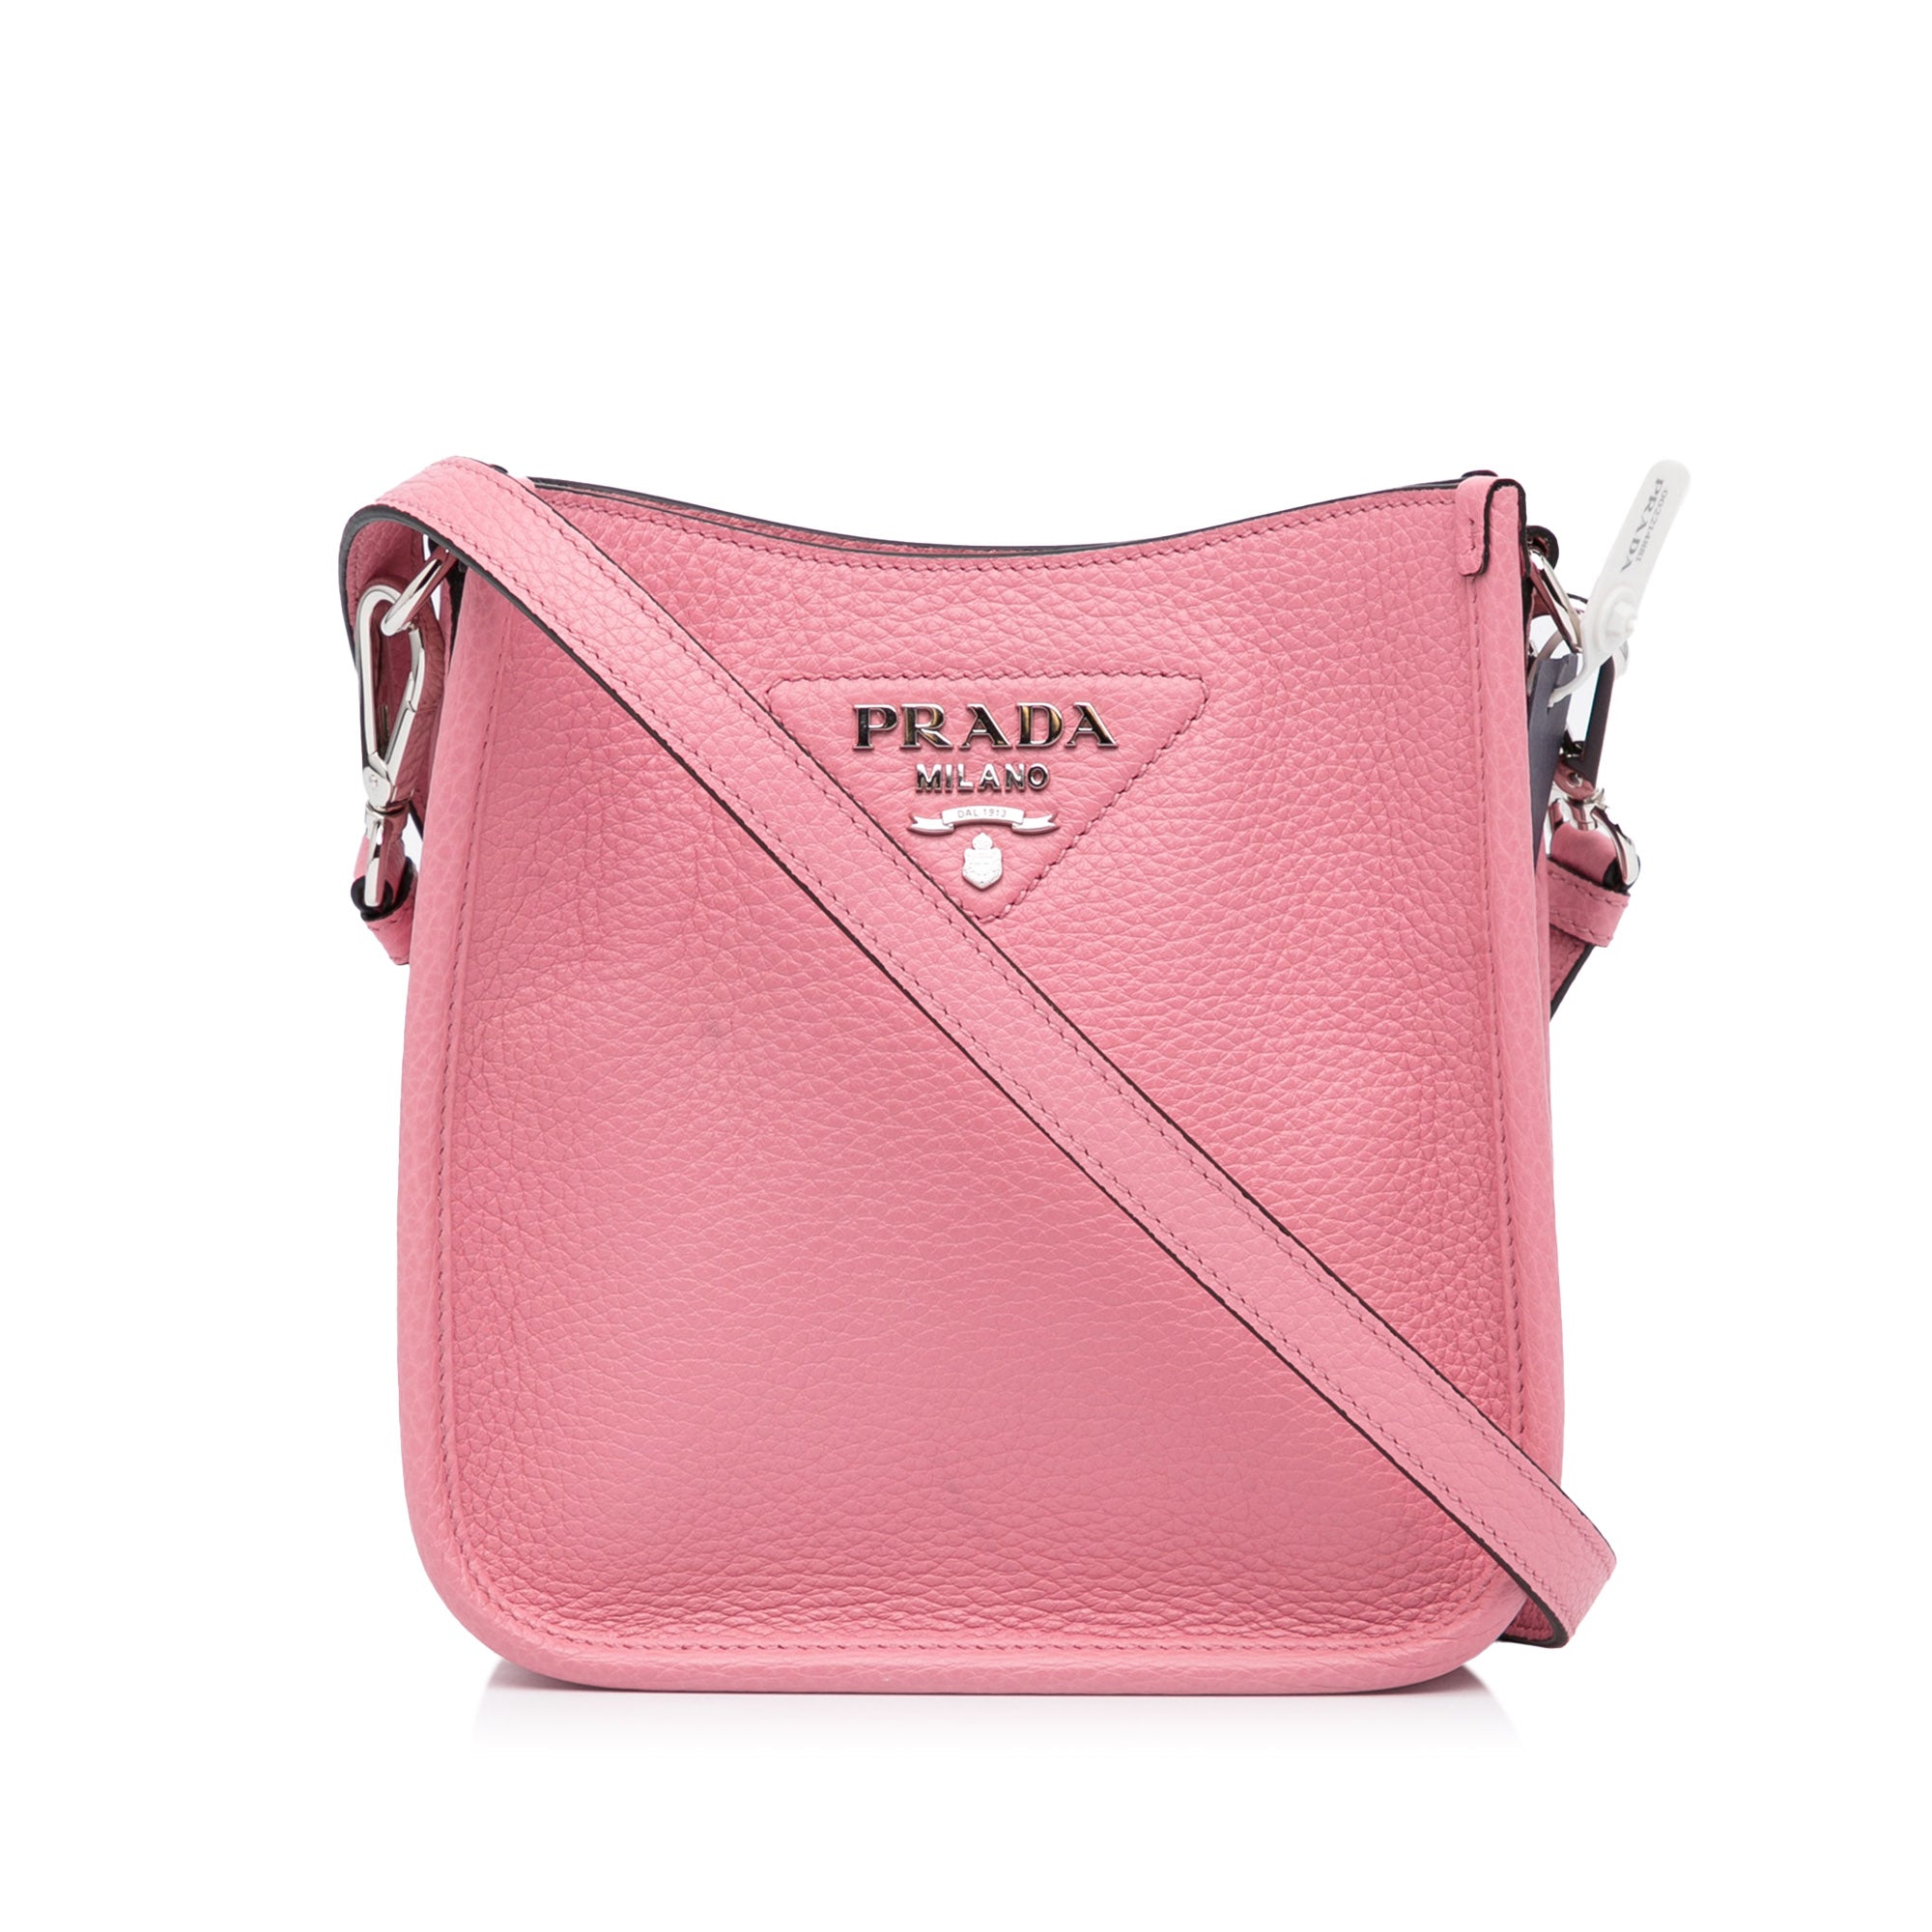 PRADA NEW DROP Prada Leather Mini Crossbody Bag Pink - Vault 55